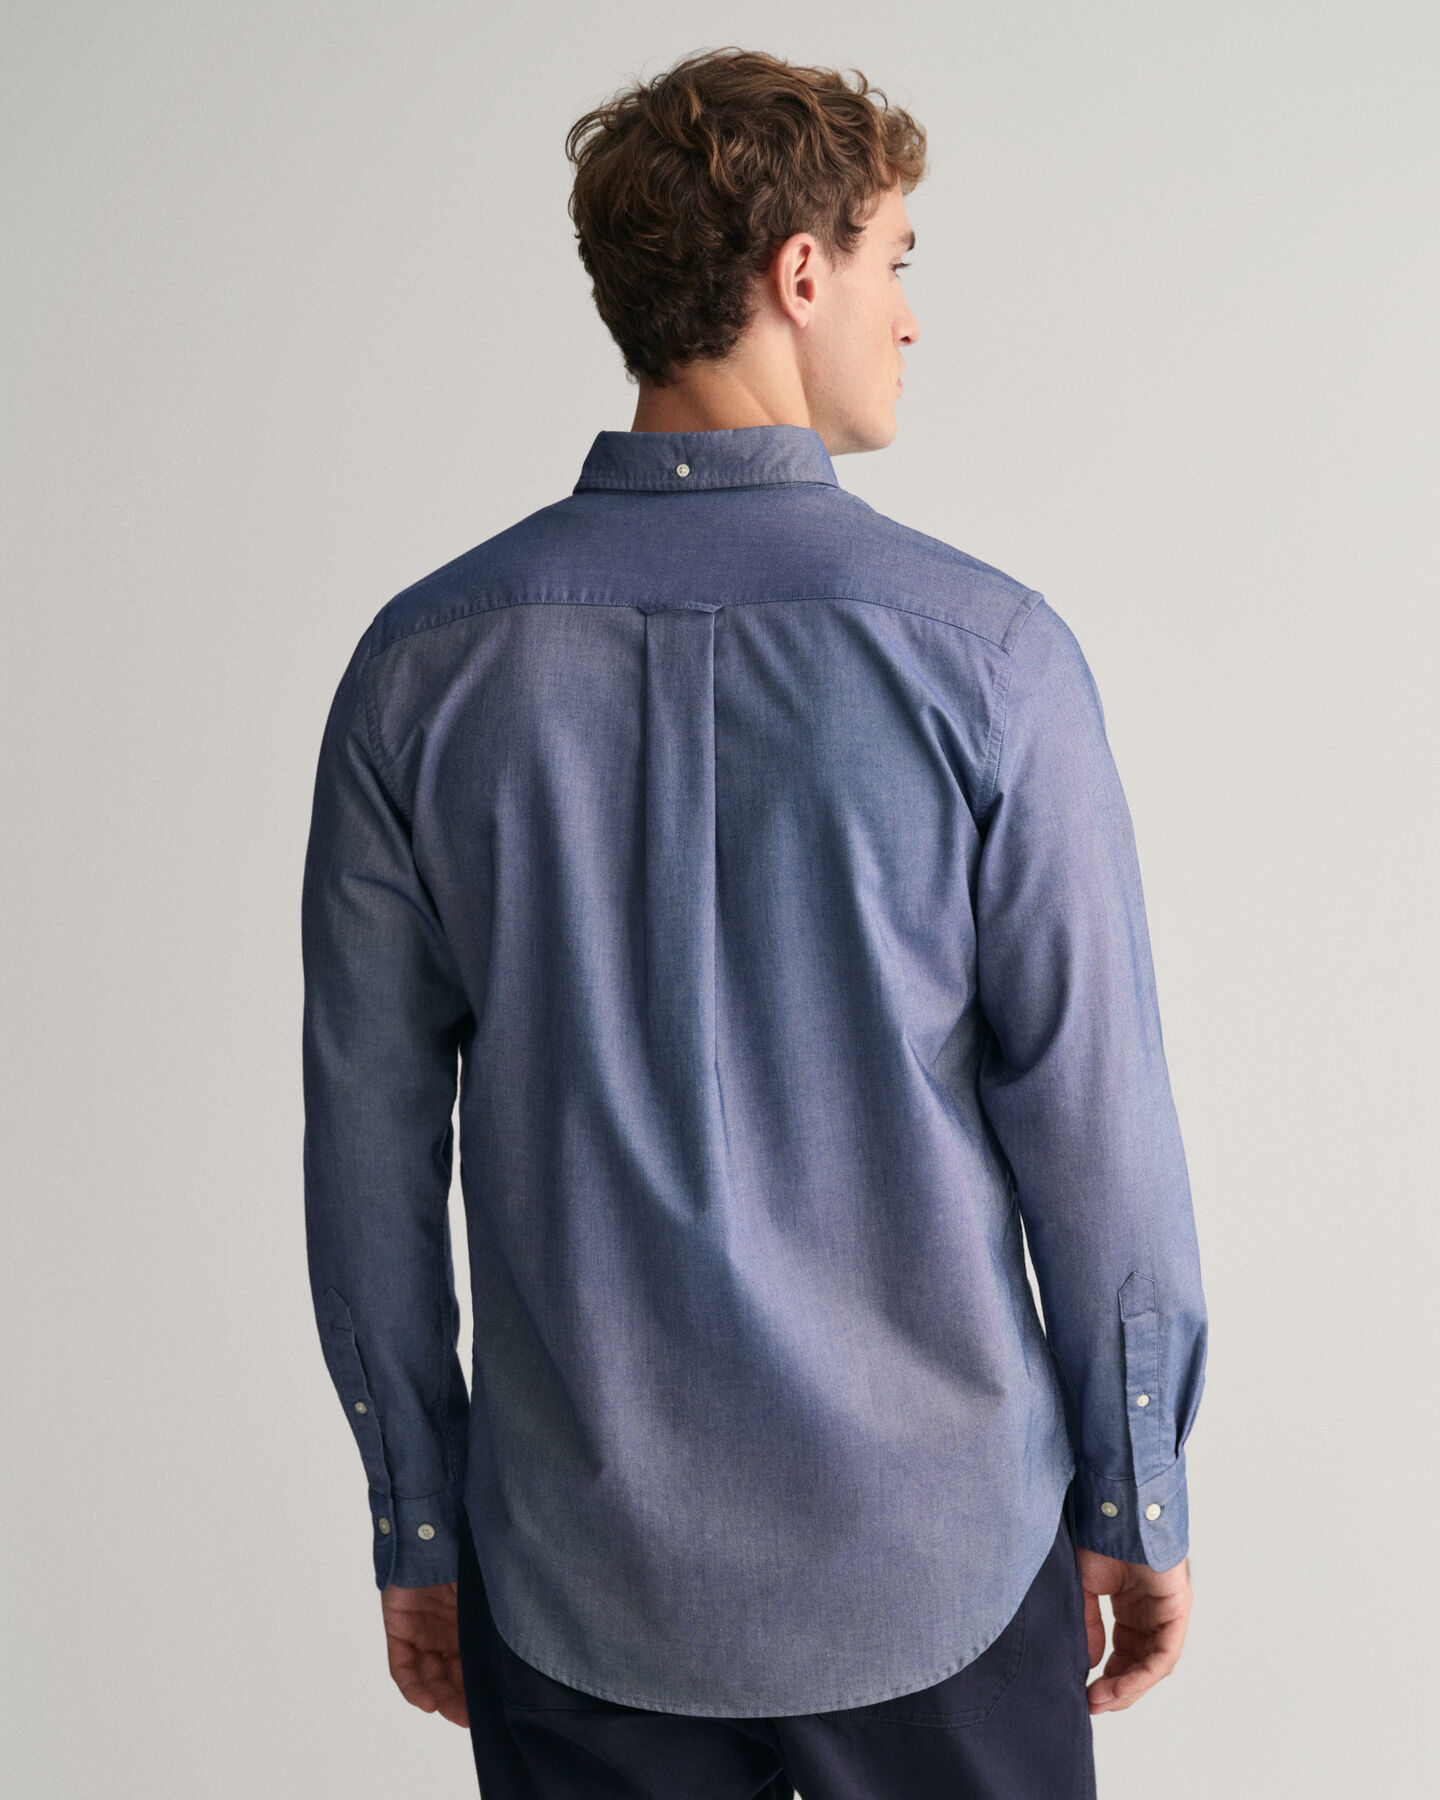 Oxford Shirt - Regular GANT Fit